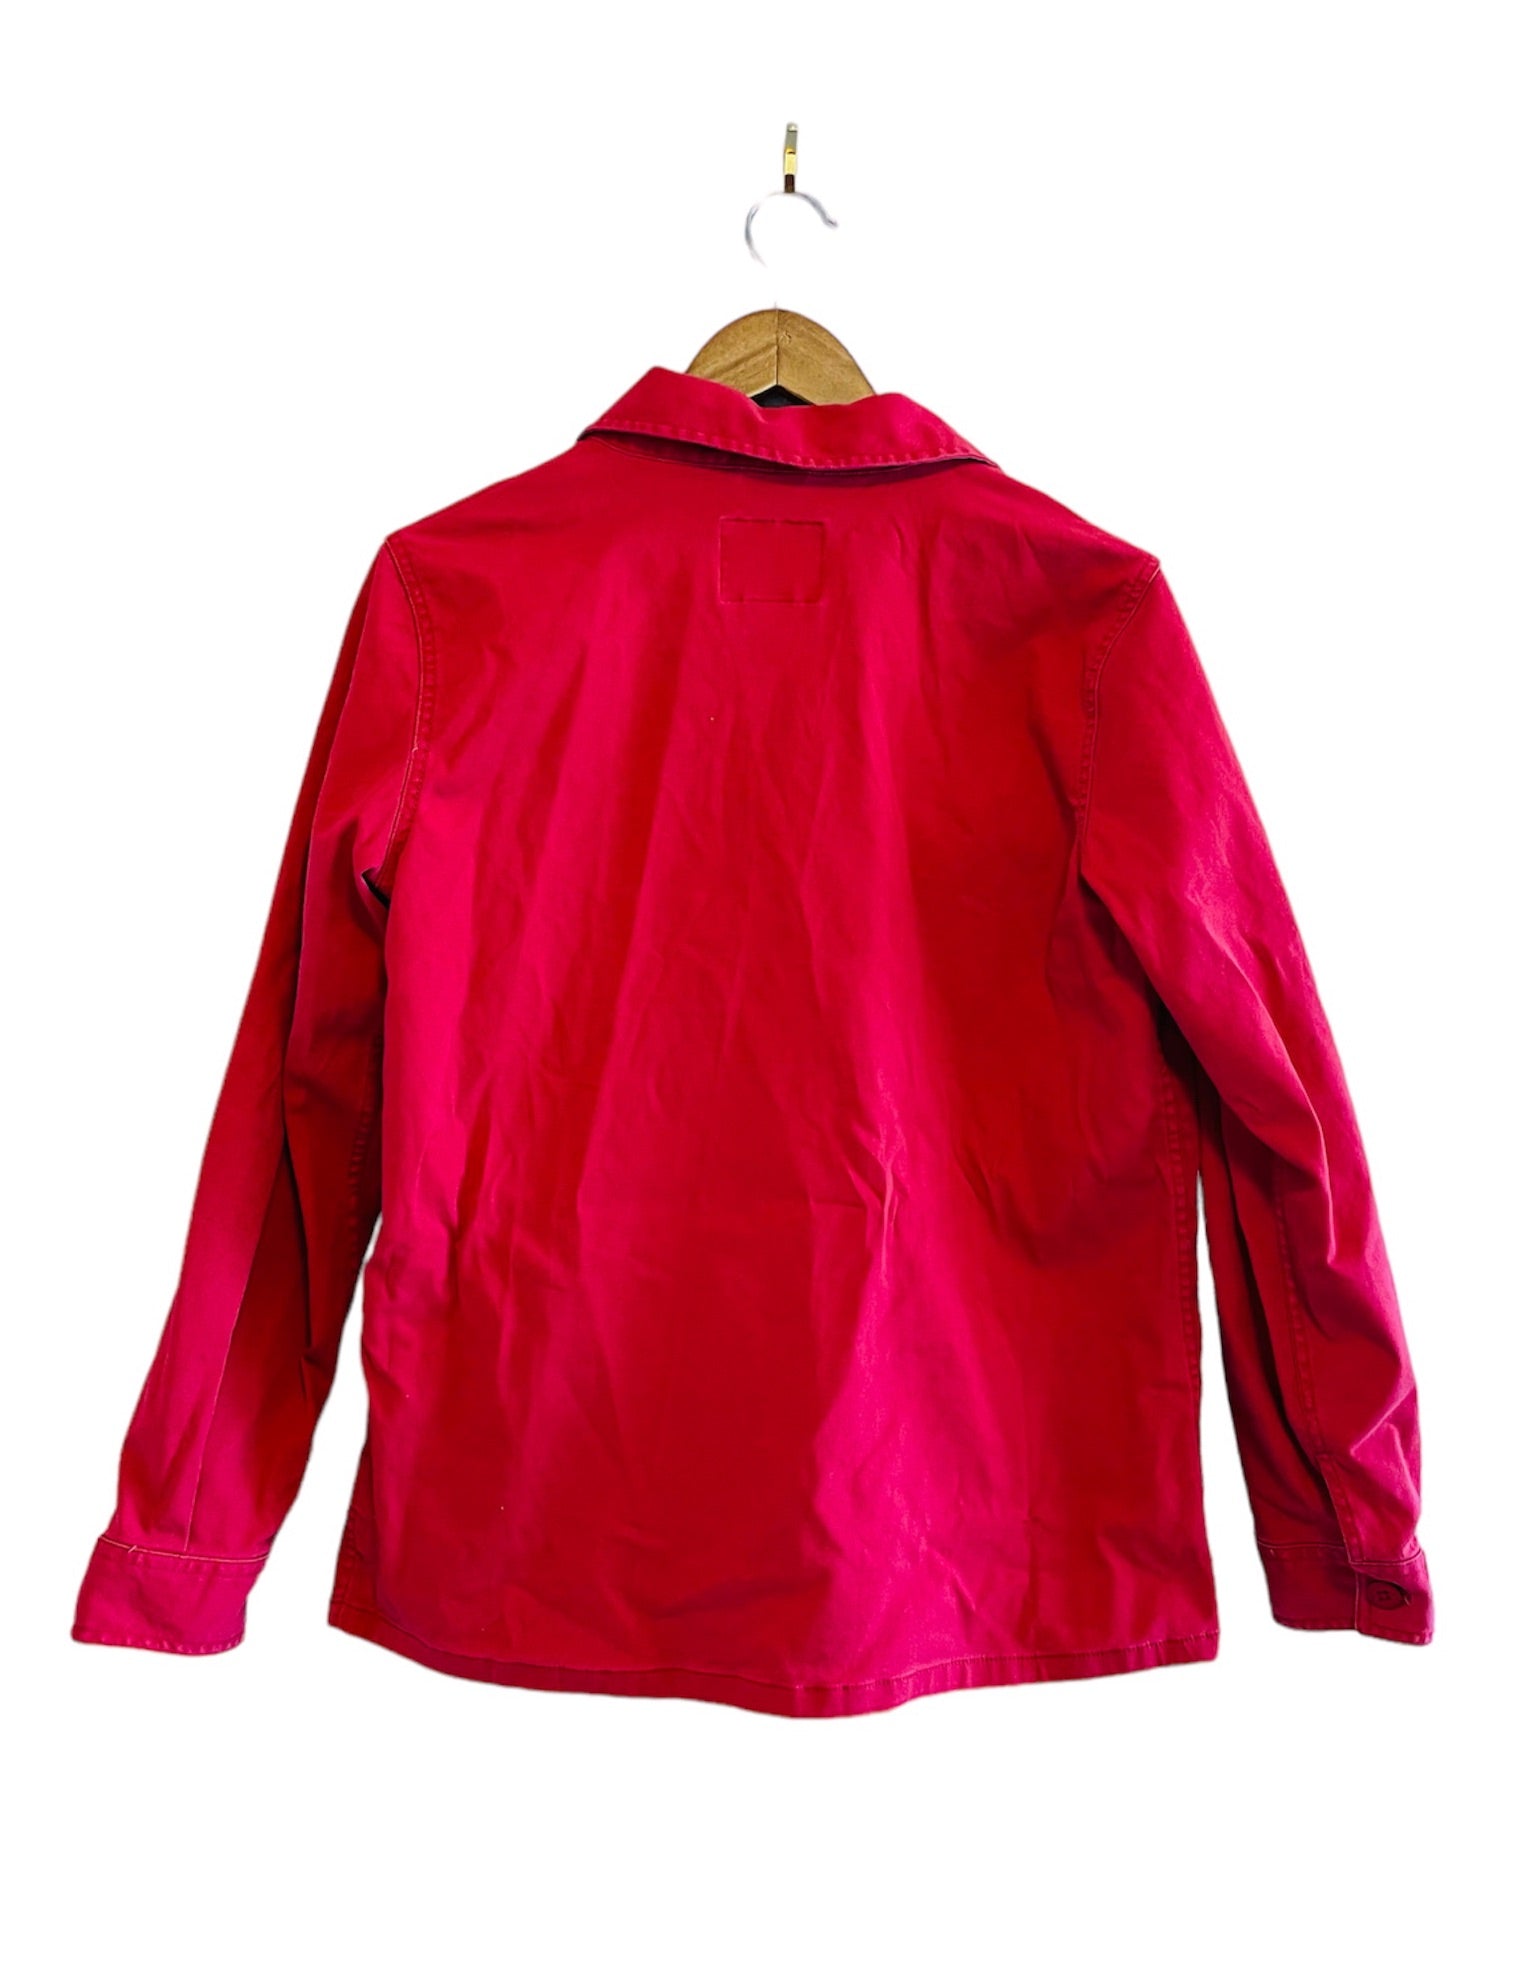 Light Weight Raspberry Red Denim Jacket Size: Small